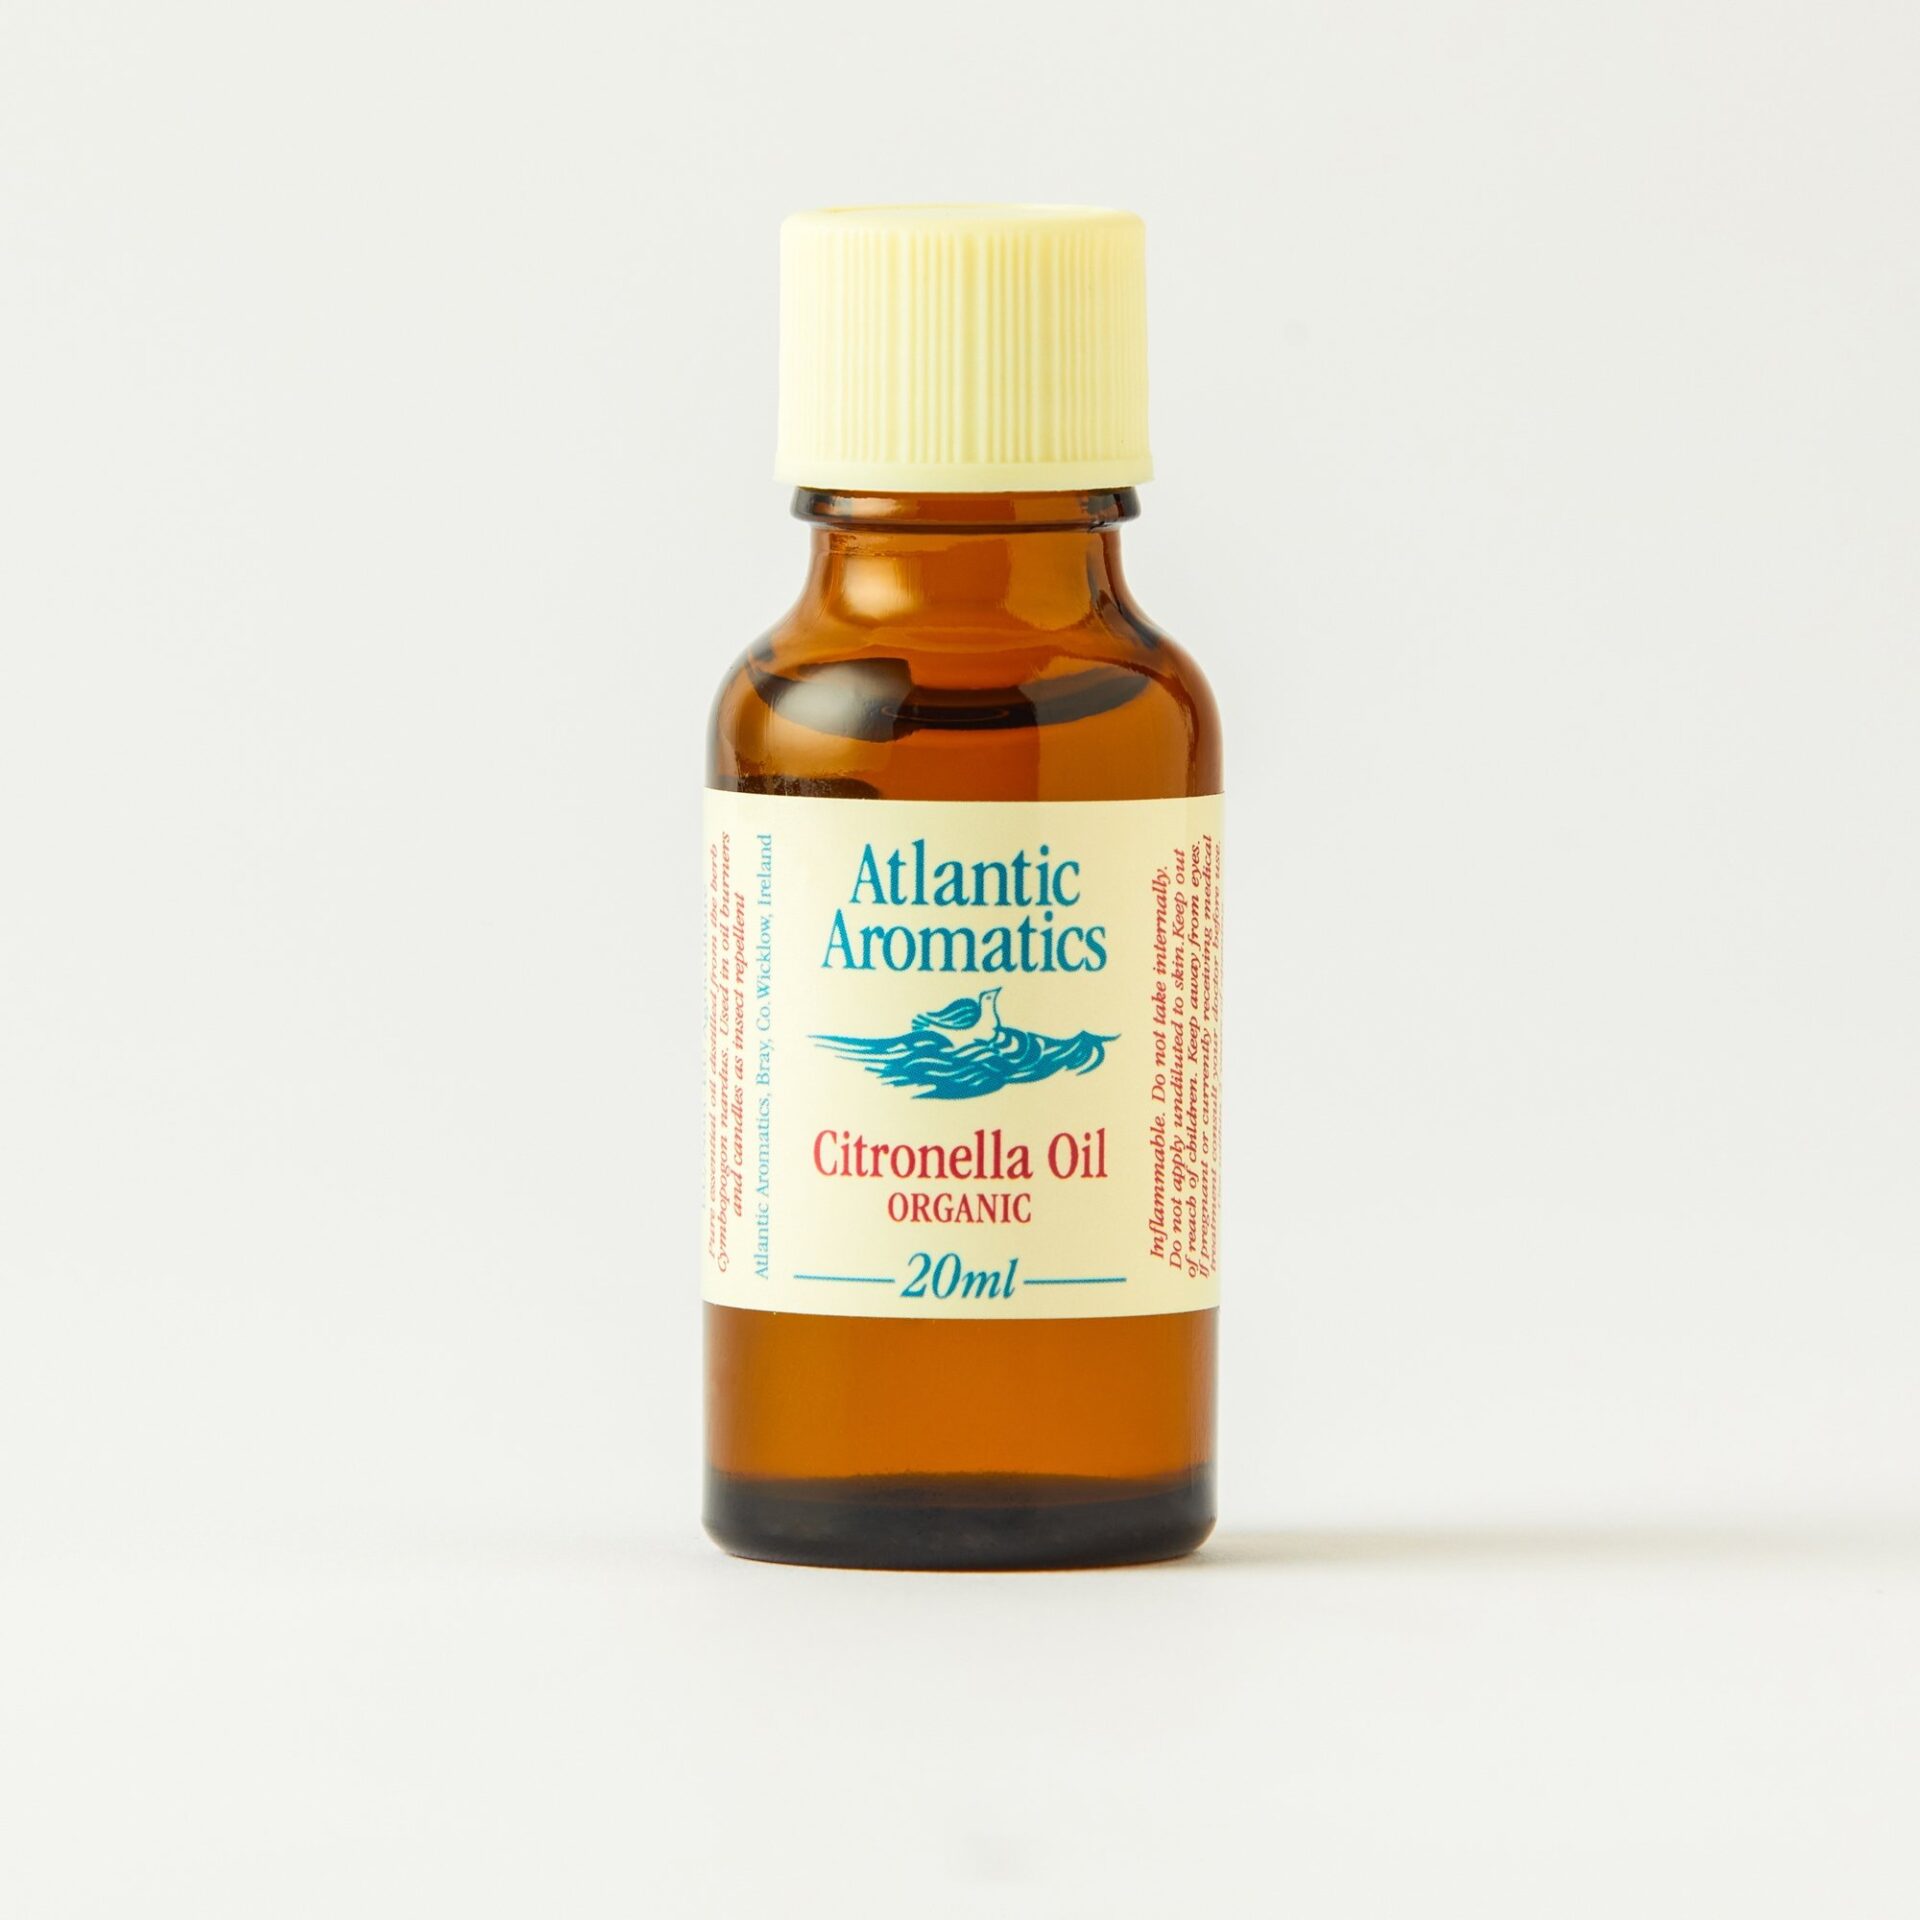 Atlantic Aromatics Citronella Oil